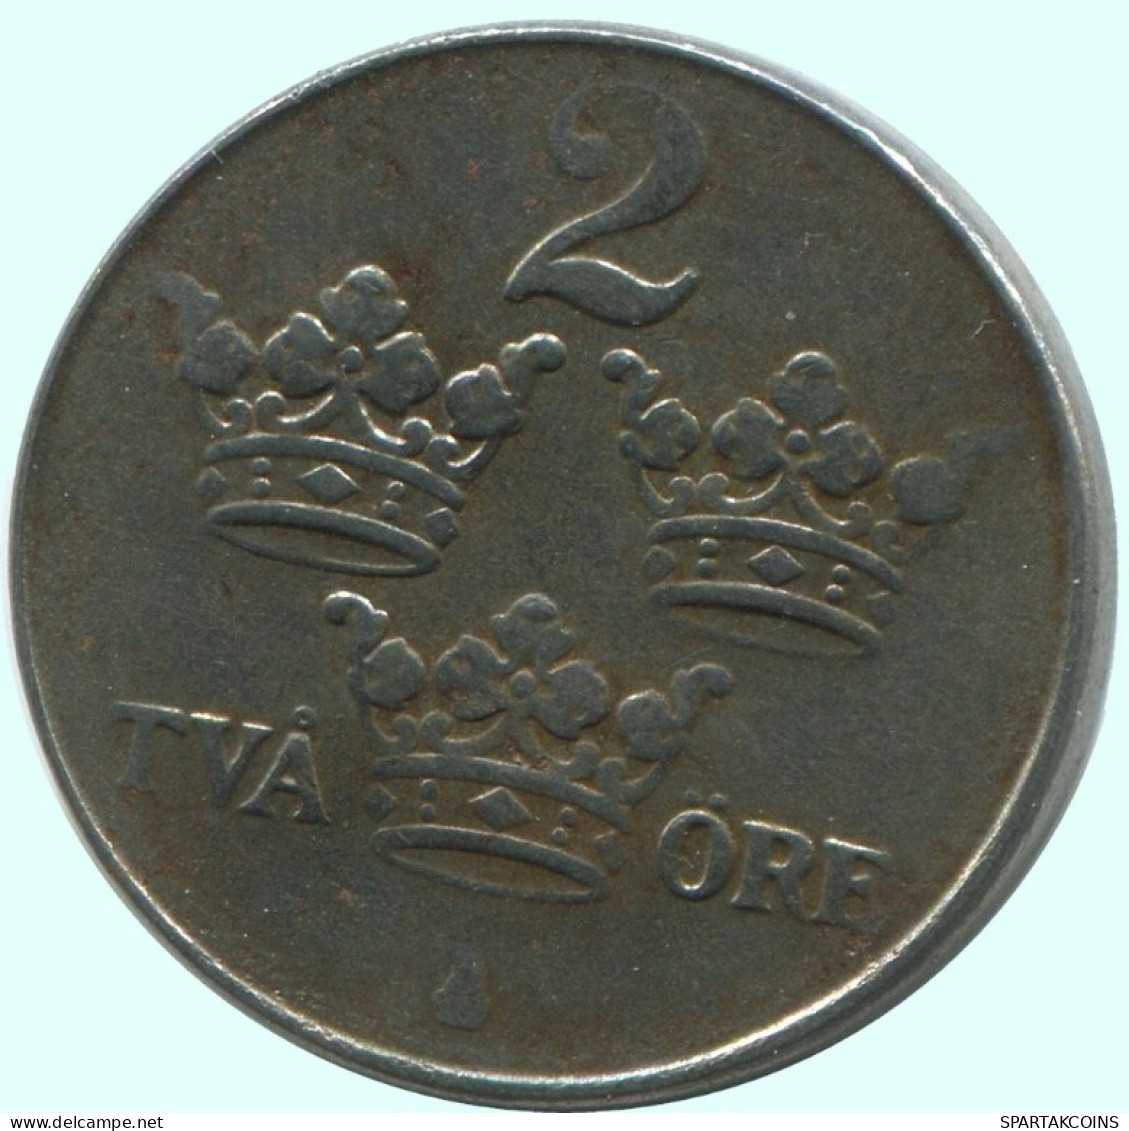 2 ORE 1917 SWEDEN Coin #AC851.2.U.A - Sweden